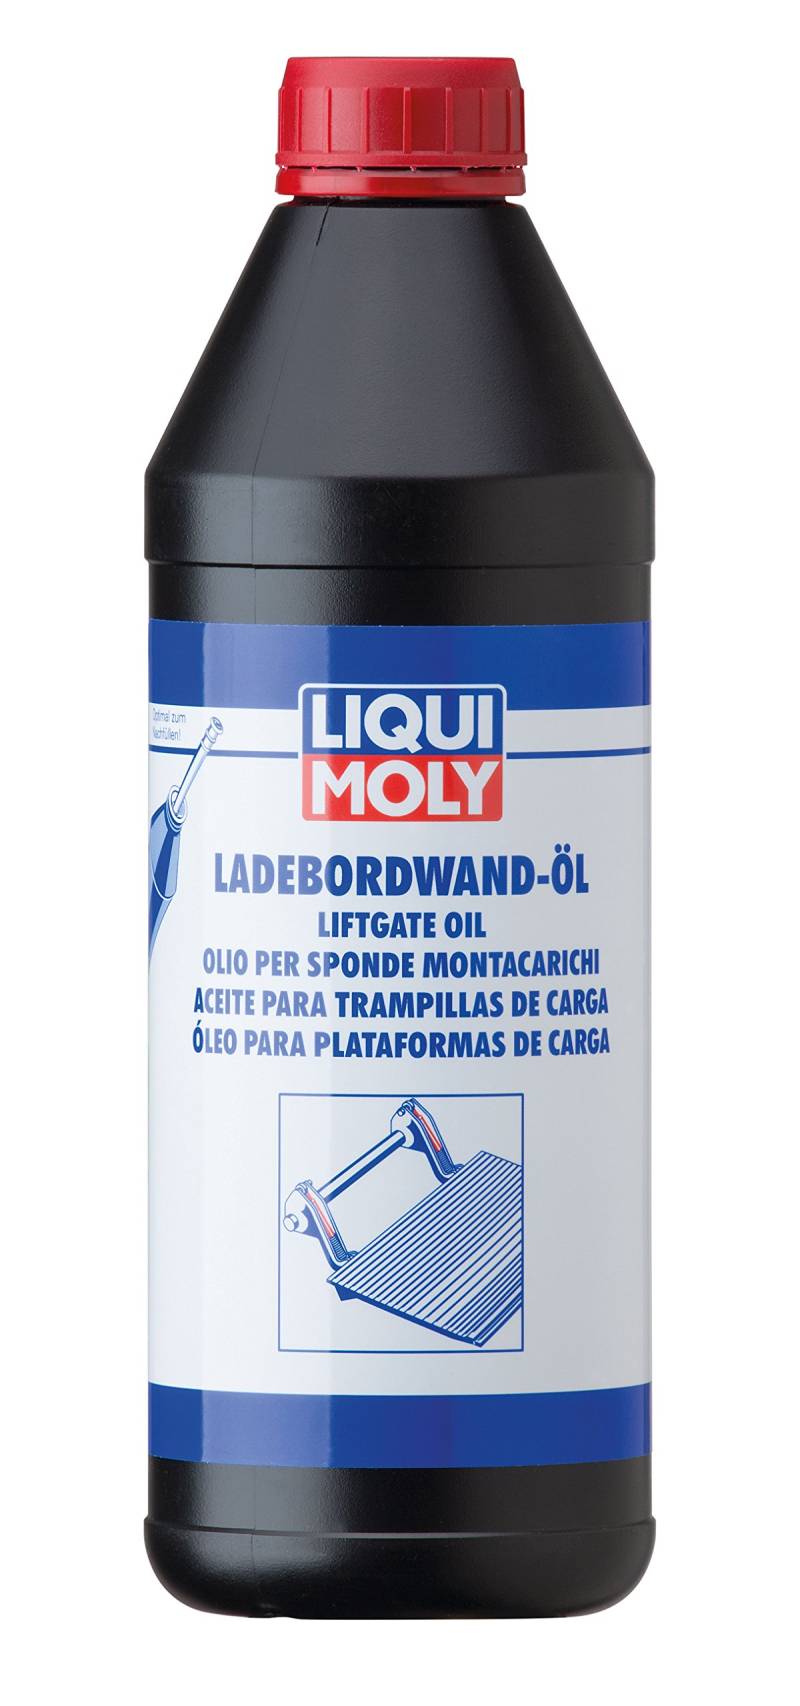 LIQUI MOLY Ladebordwand-Öl | 1 L | Getriebeöl | Hydrauliköl | Art.-Nr.: 1097 von Liqui Moly